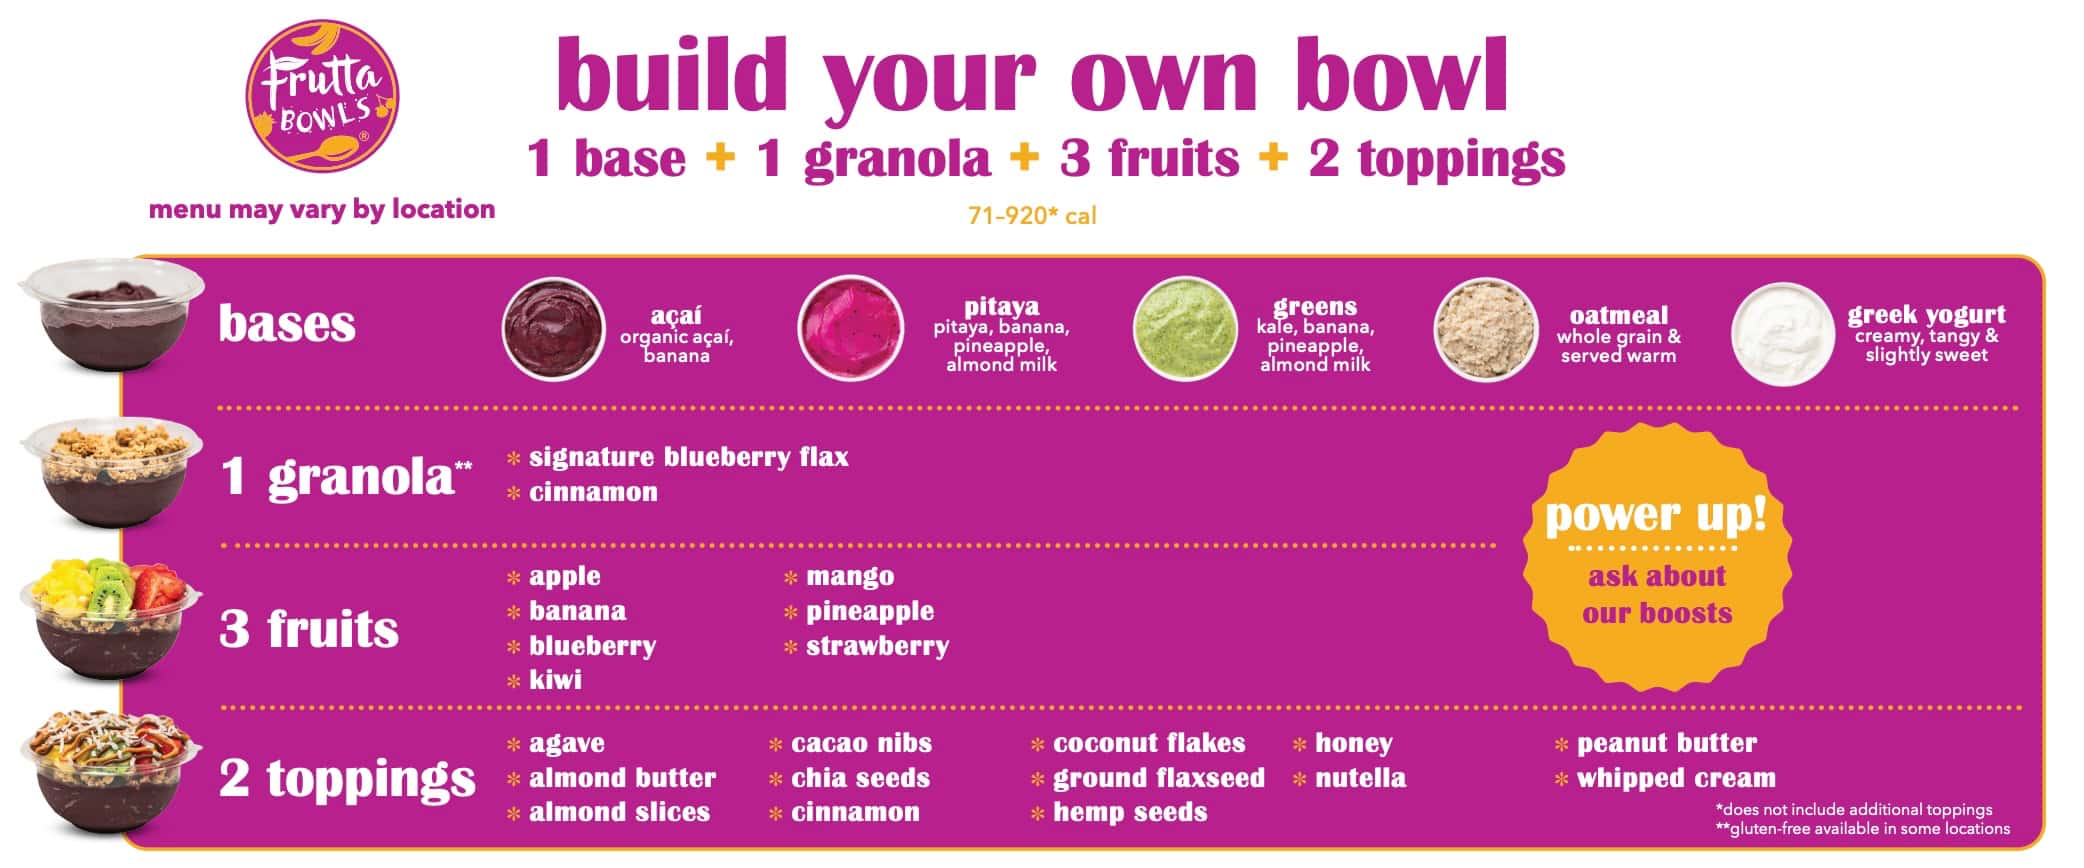 Frutta Bowls Build Your Own Menu